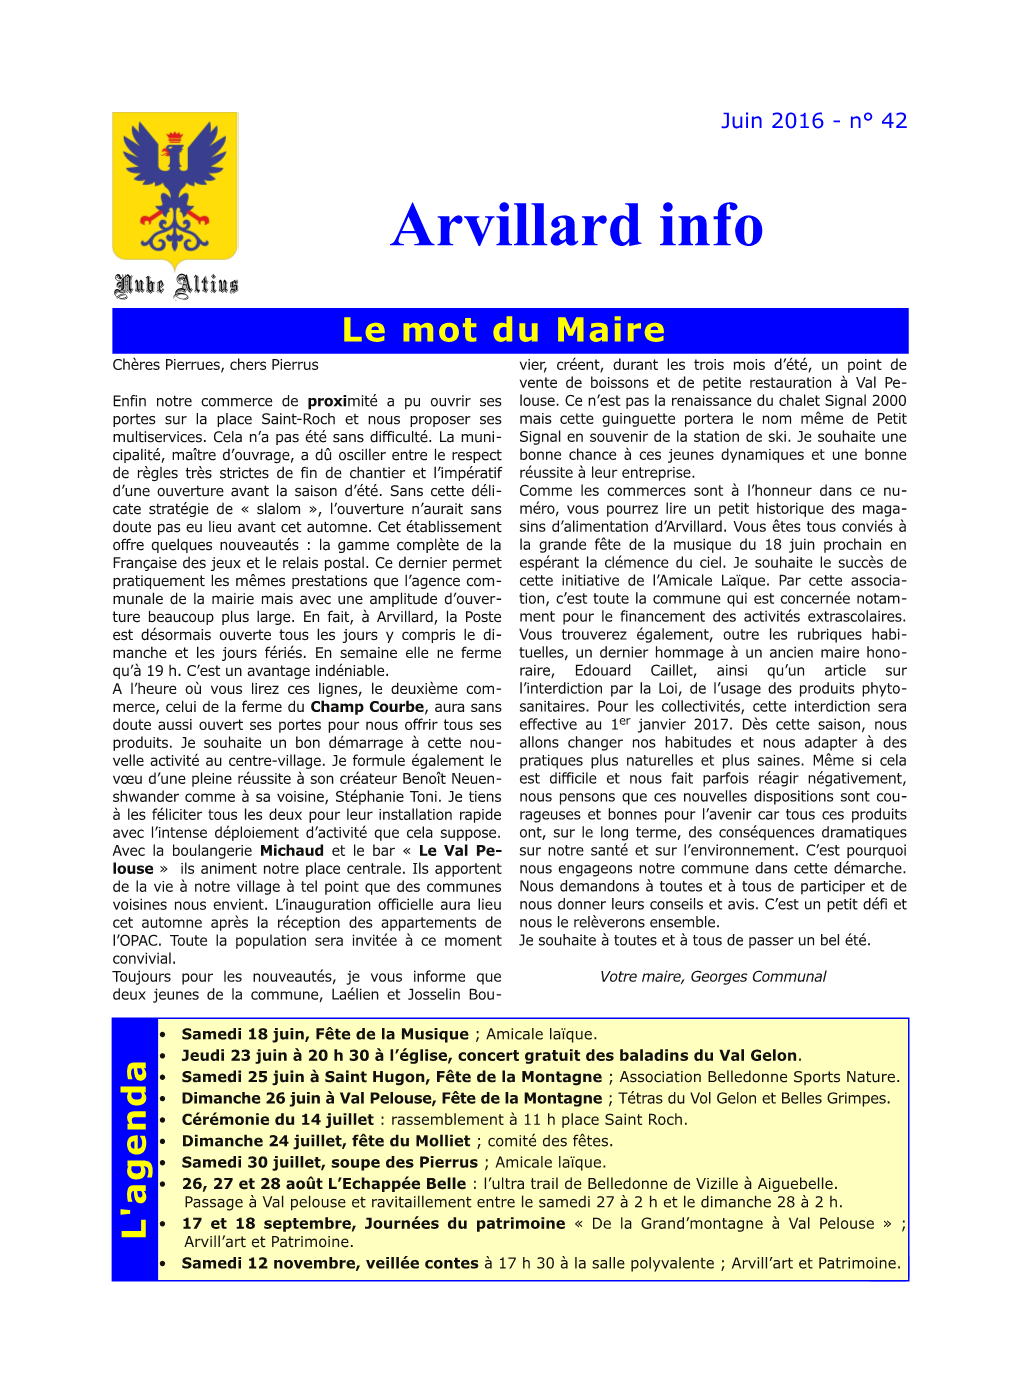 Arvillard Info